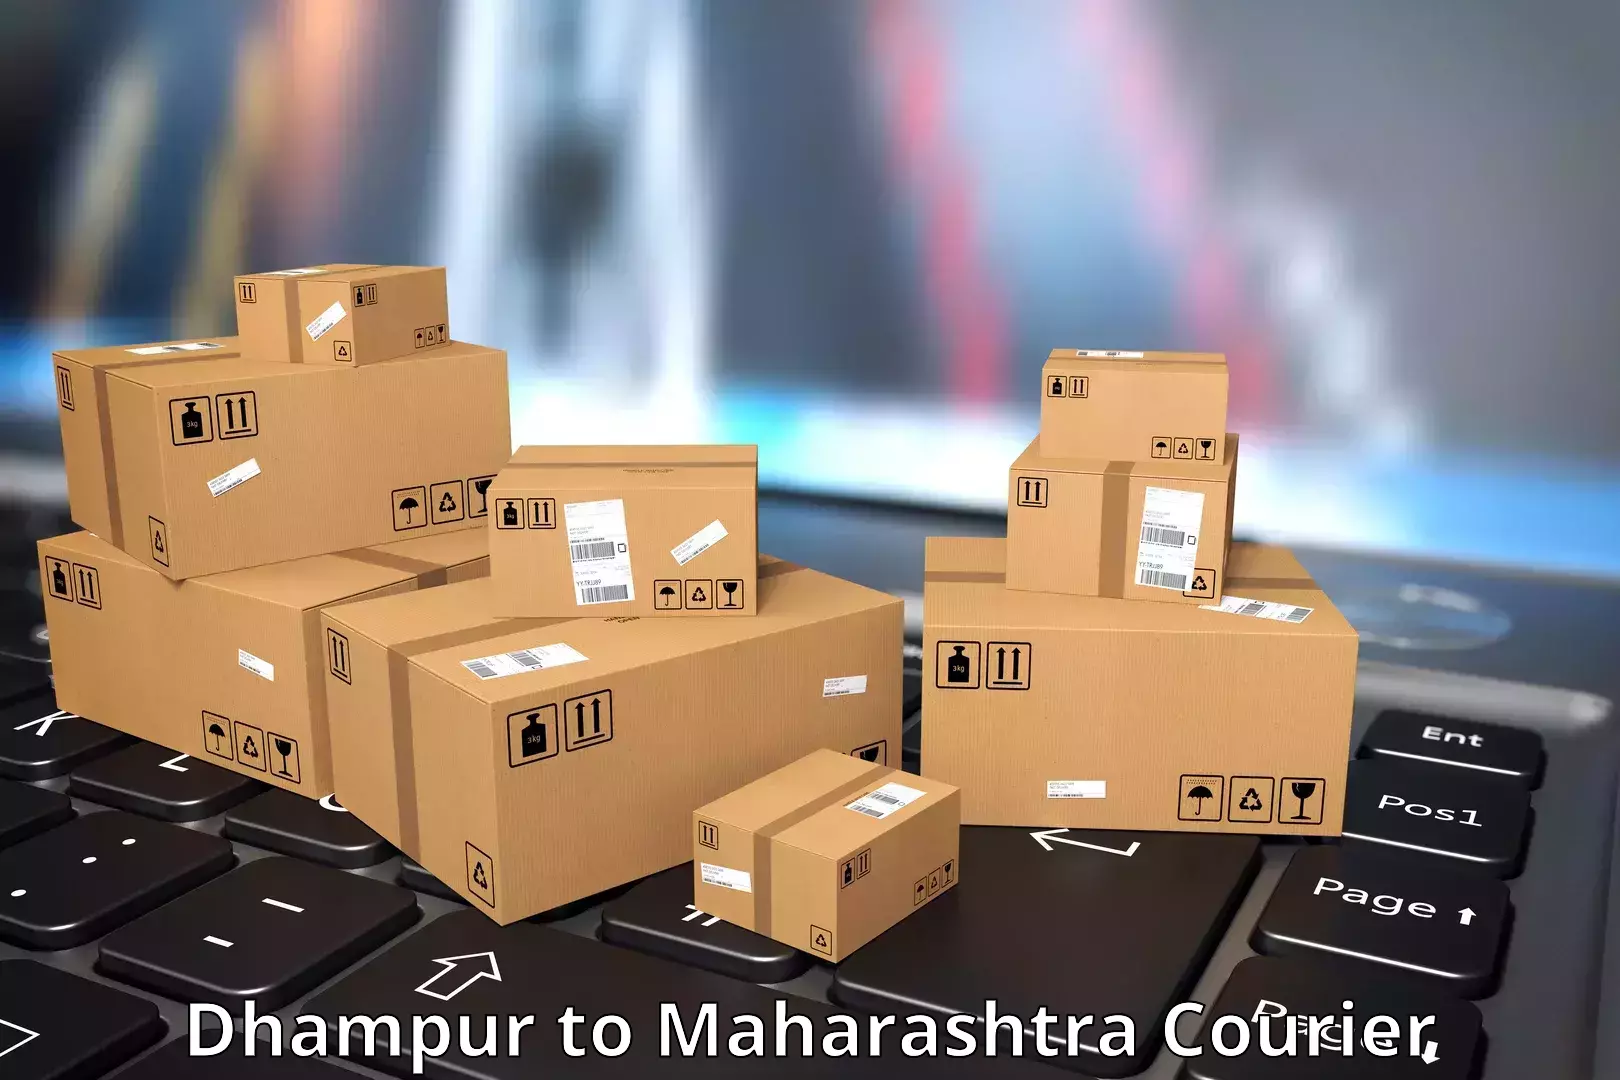 Global delivery options Dhampur to Ganpatipule